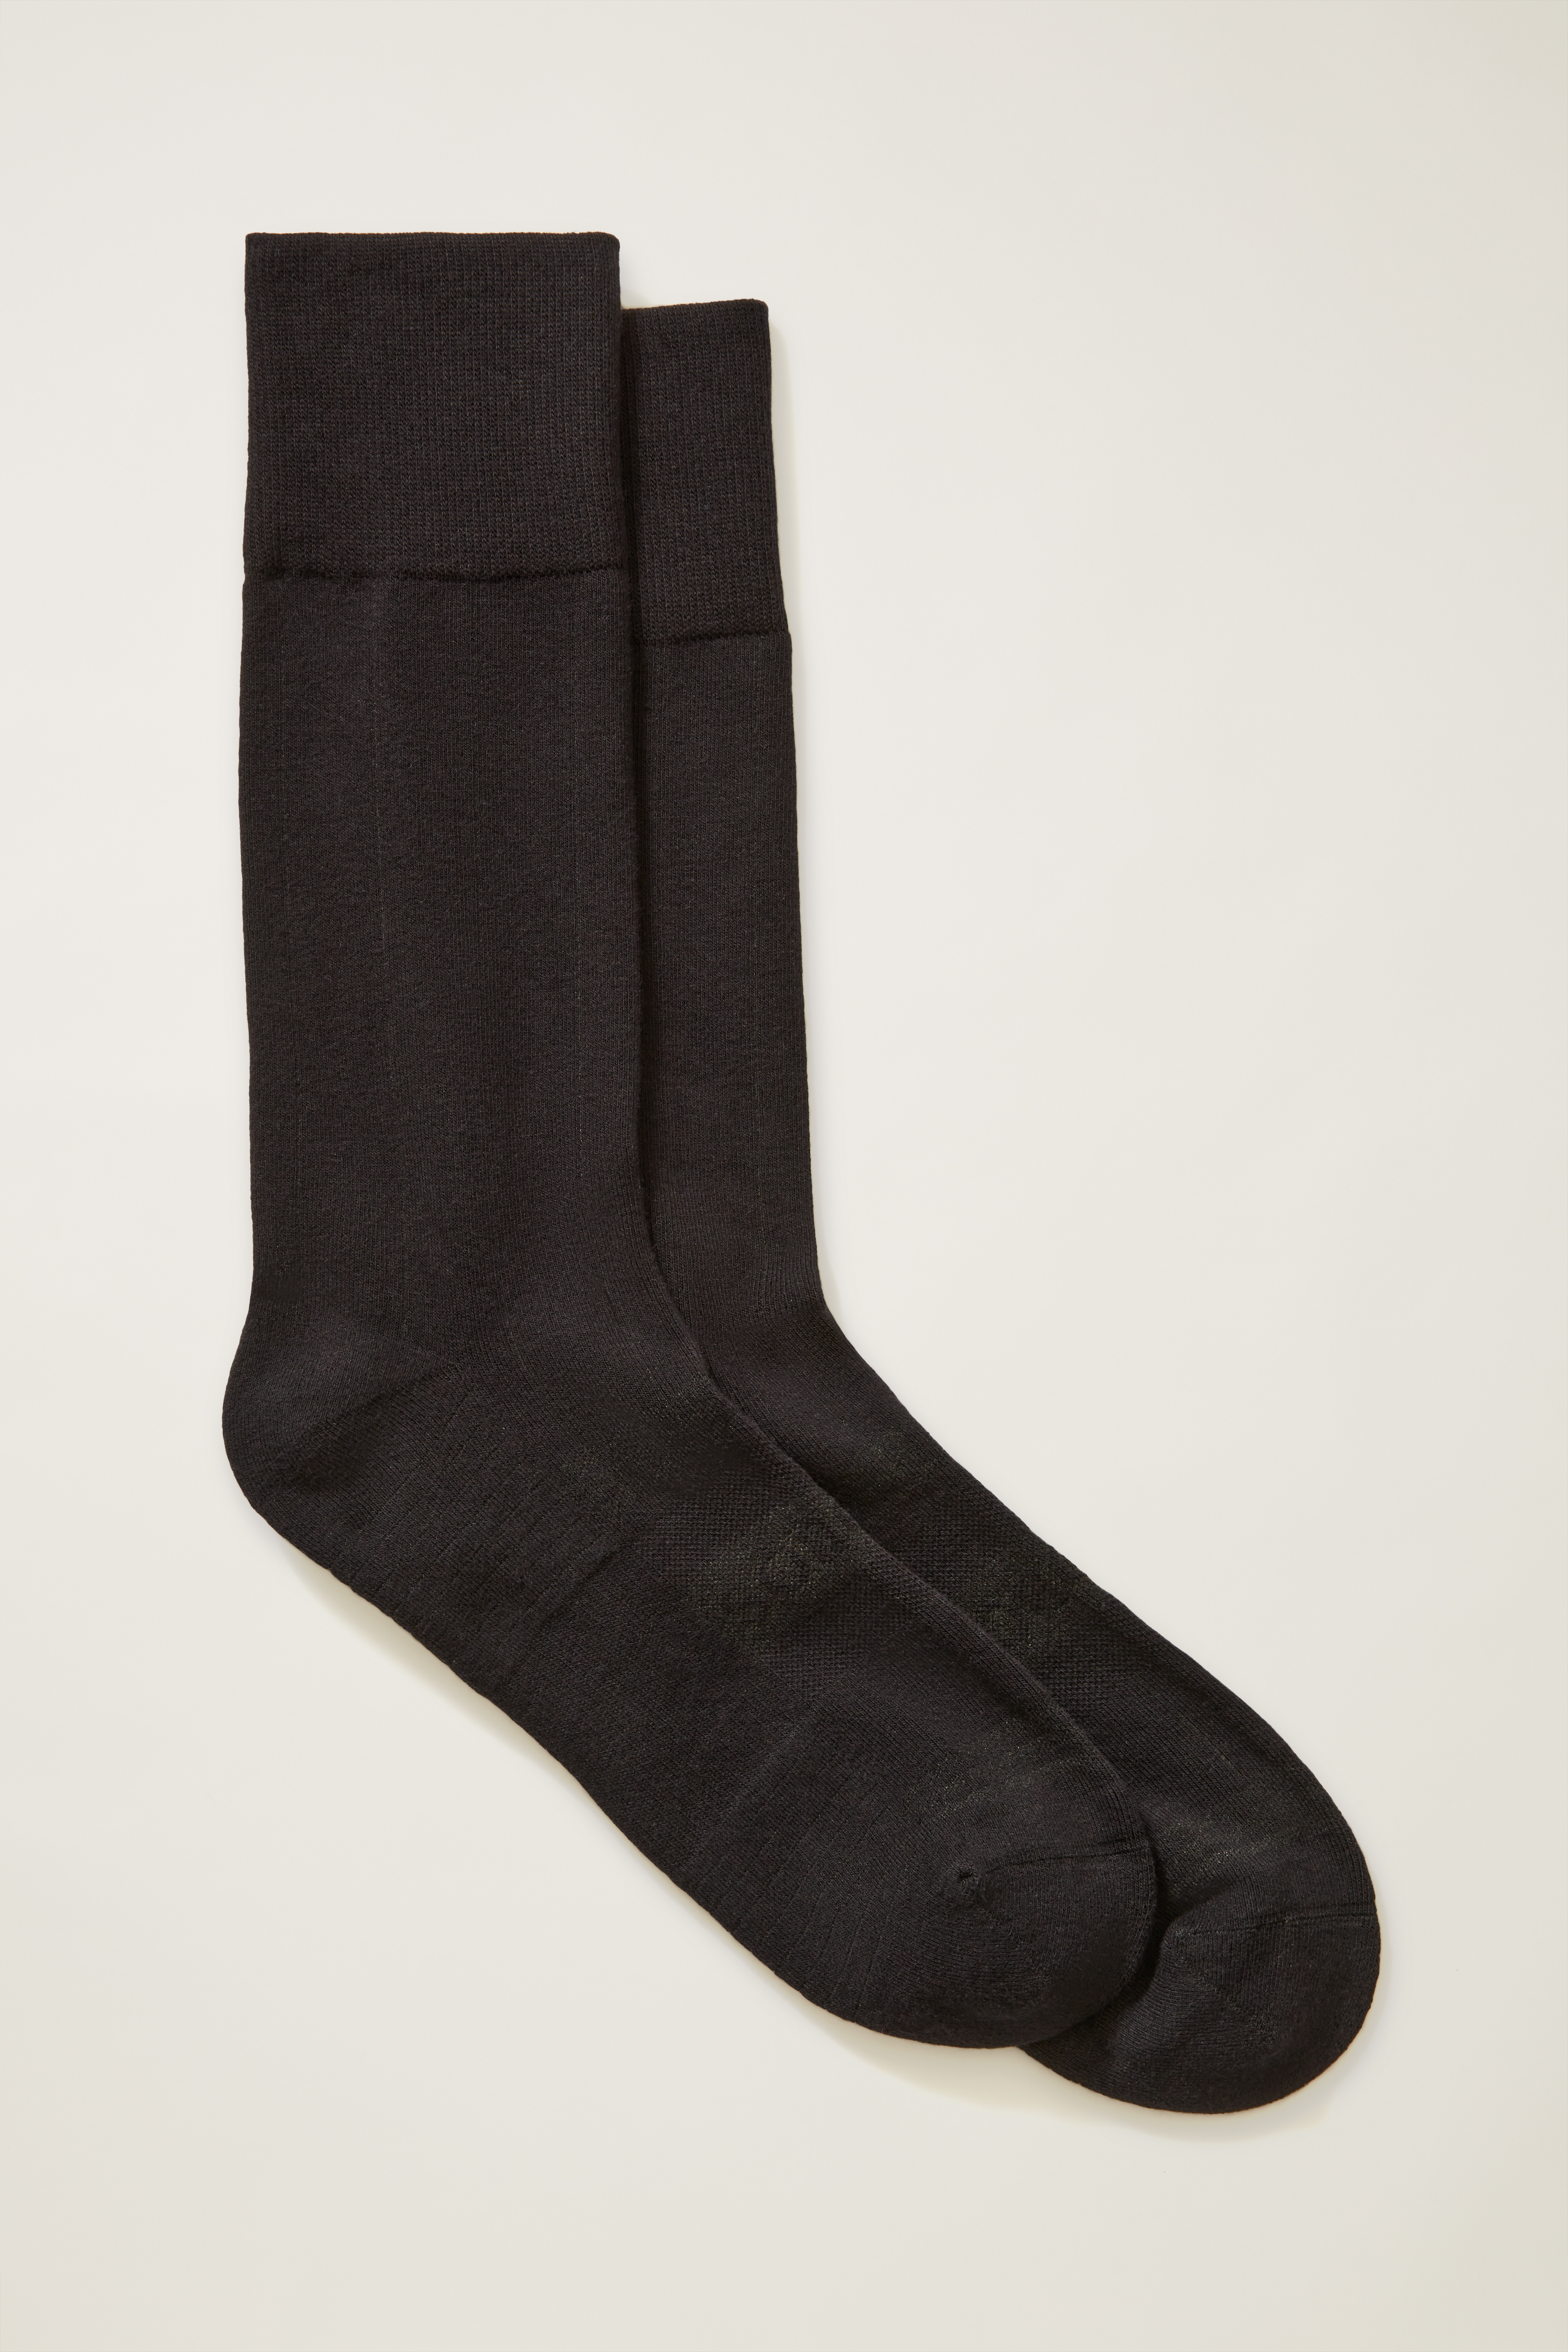 Soft & Comfortable Bonobos Everyday Dress Socks